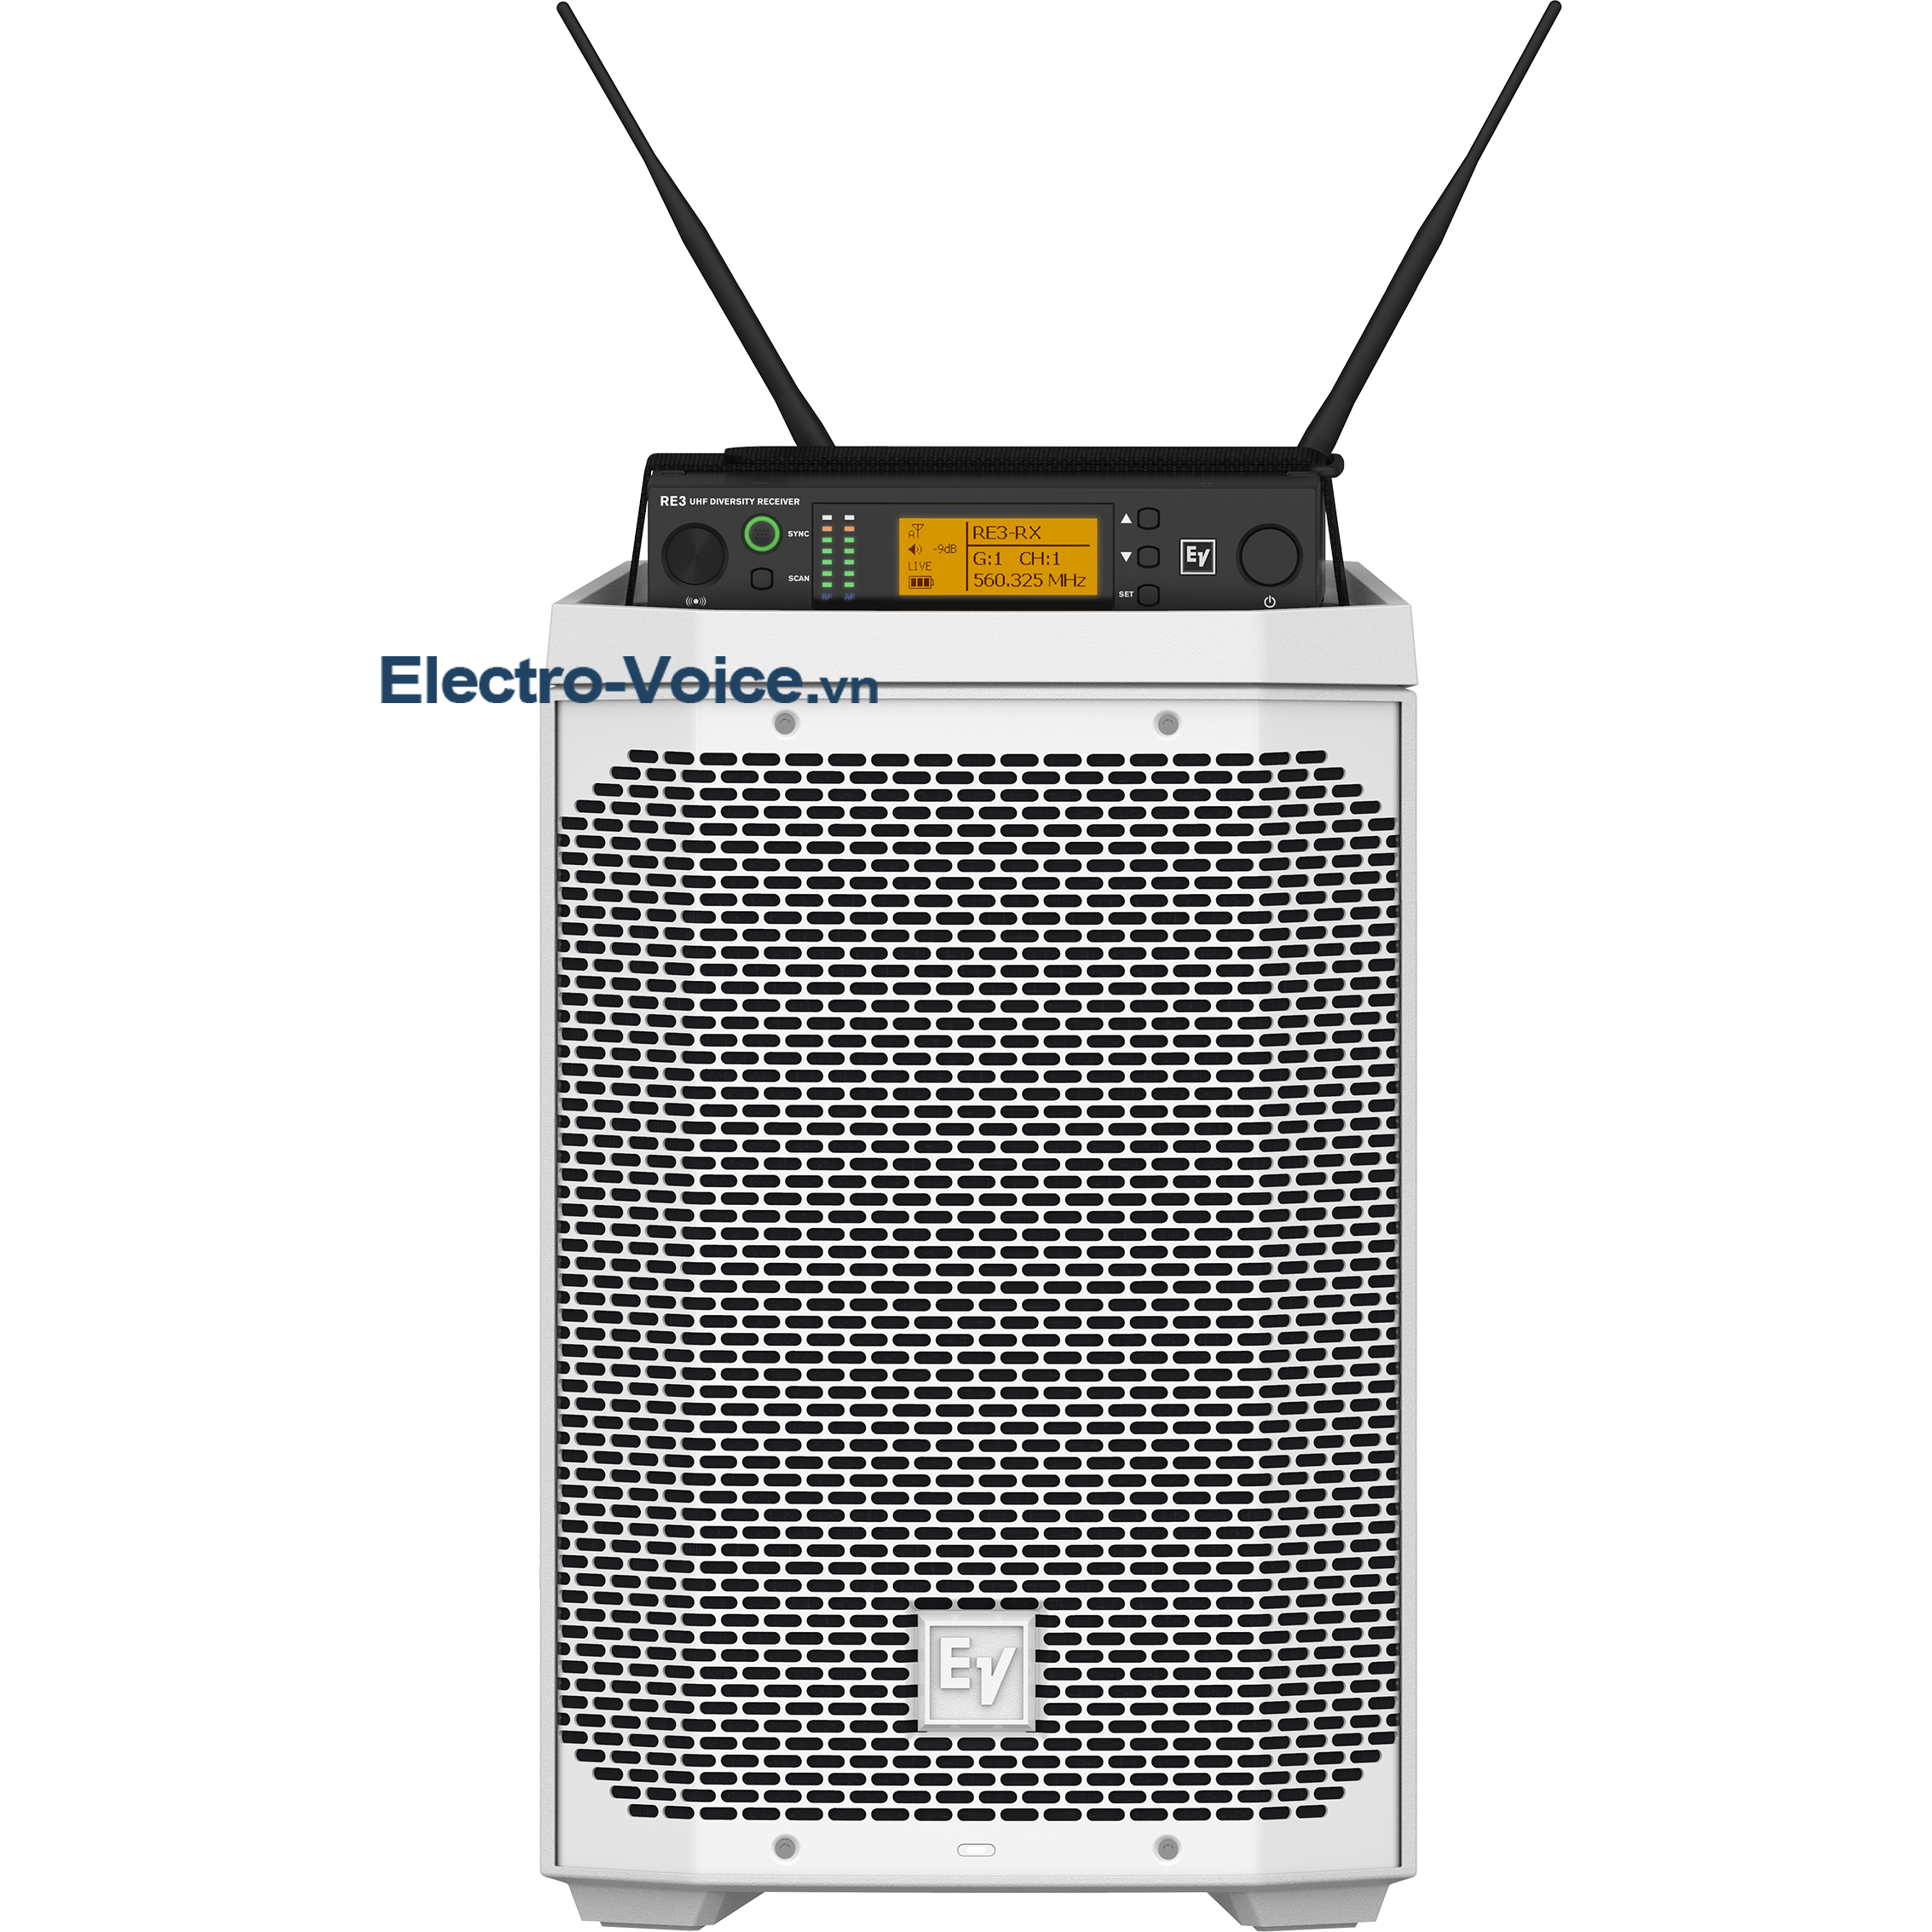 Loa chuyên nghiệp EV (Electro-Voice) EVerse 8 dùng pin